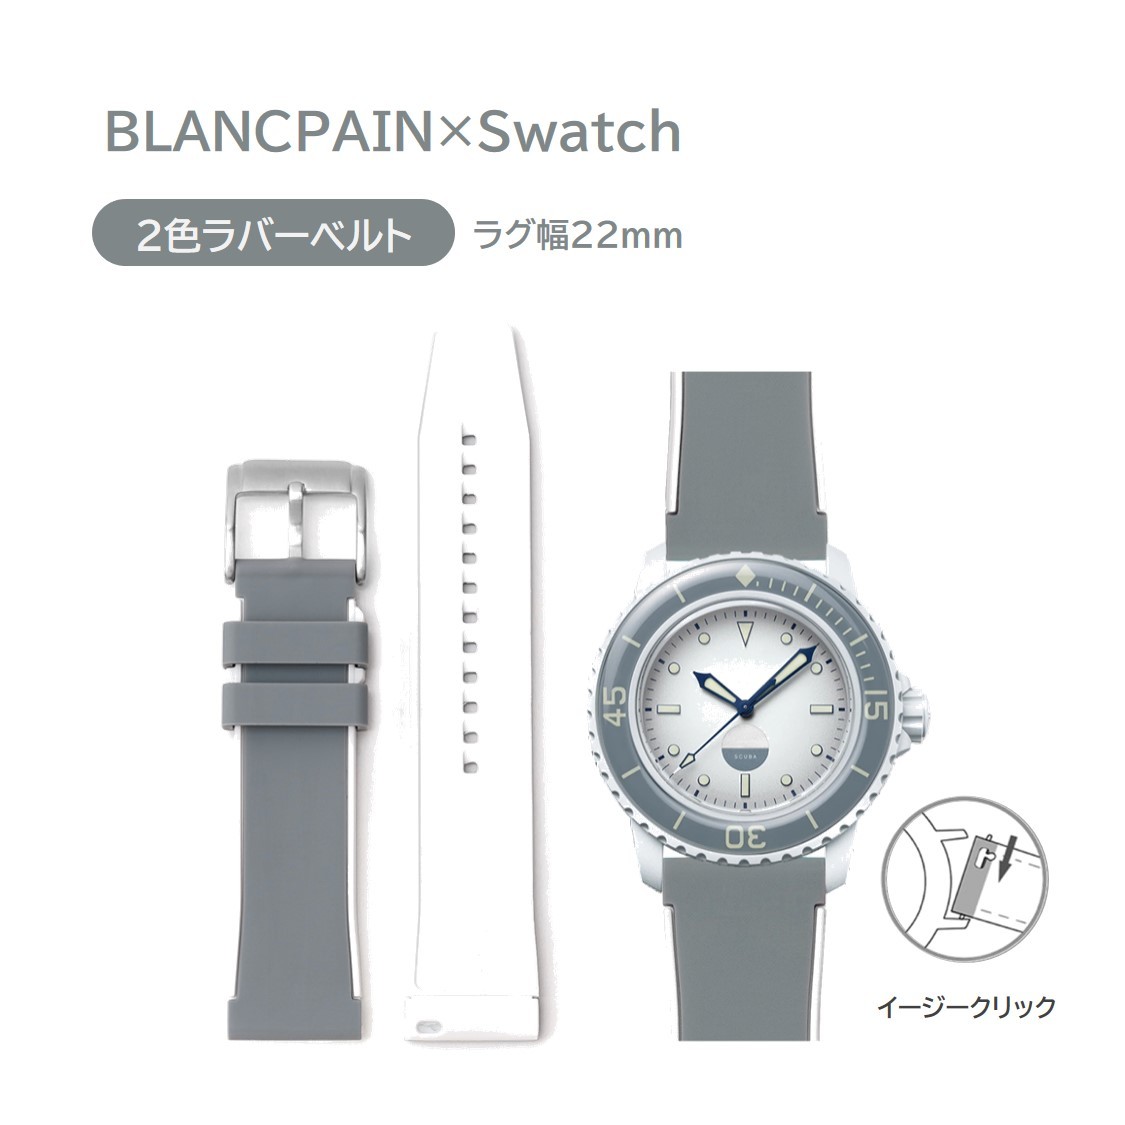 BLANCPAIN×Swatch 2色ラバーベルト グレー/ホワイト